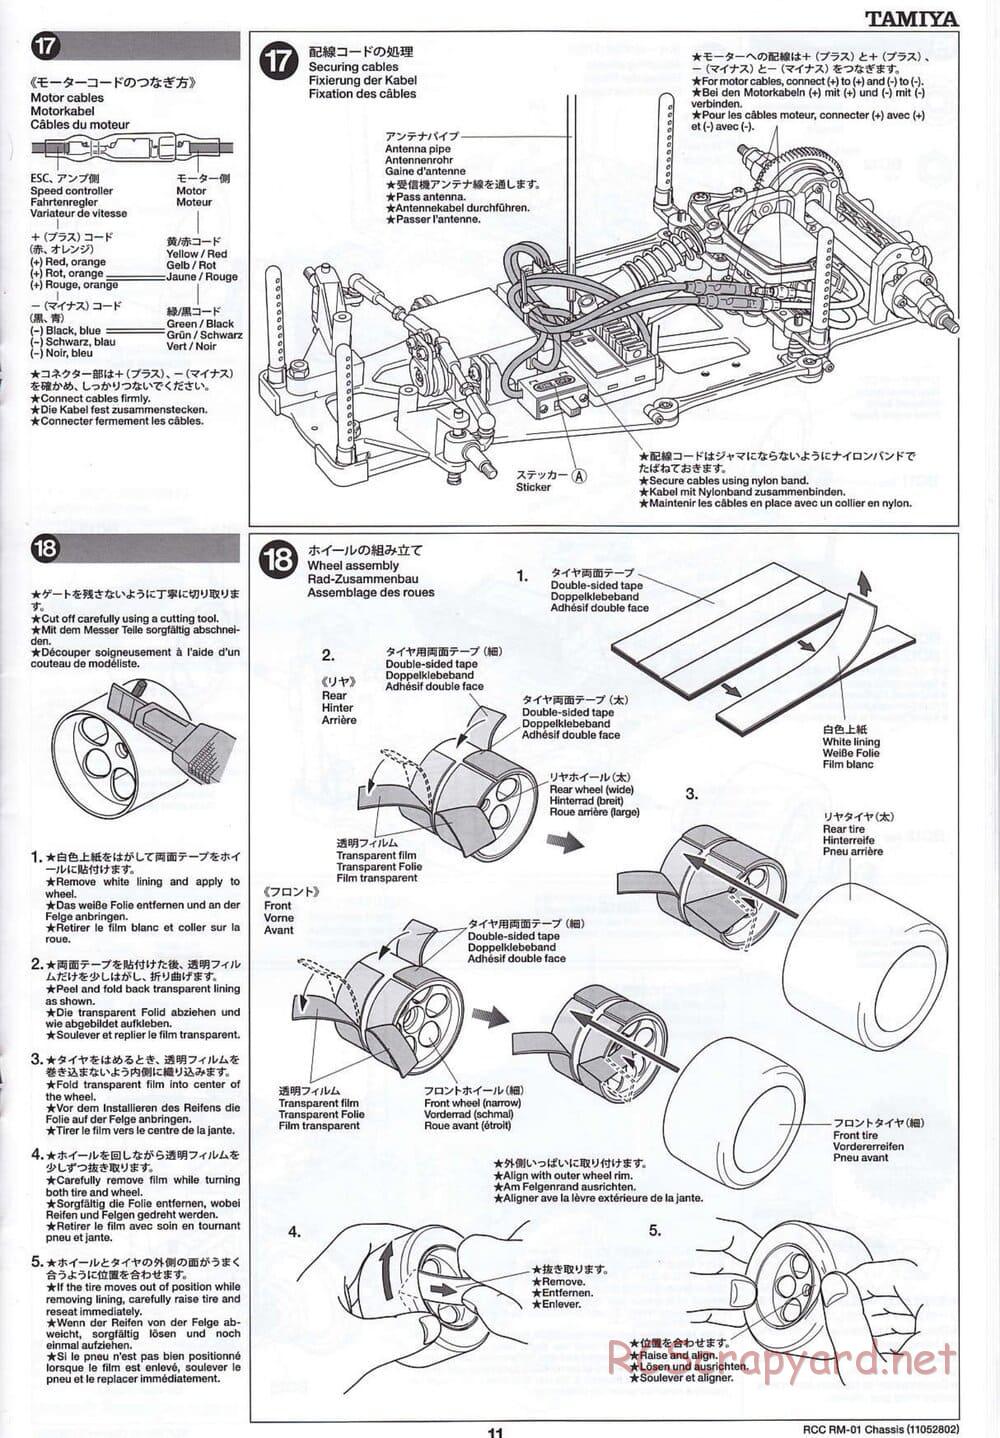 Tamiya - RM-01 Chassis - Manual - Page 11